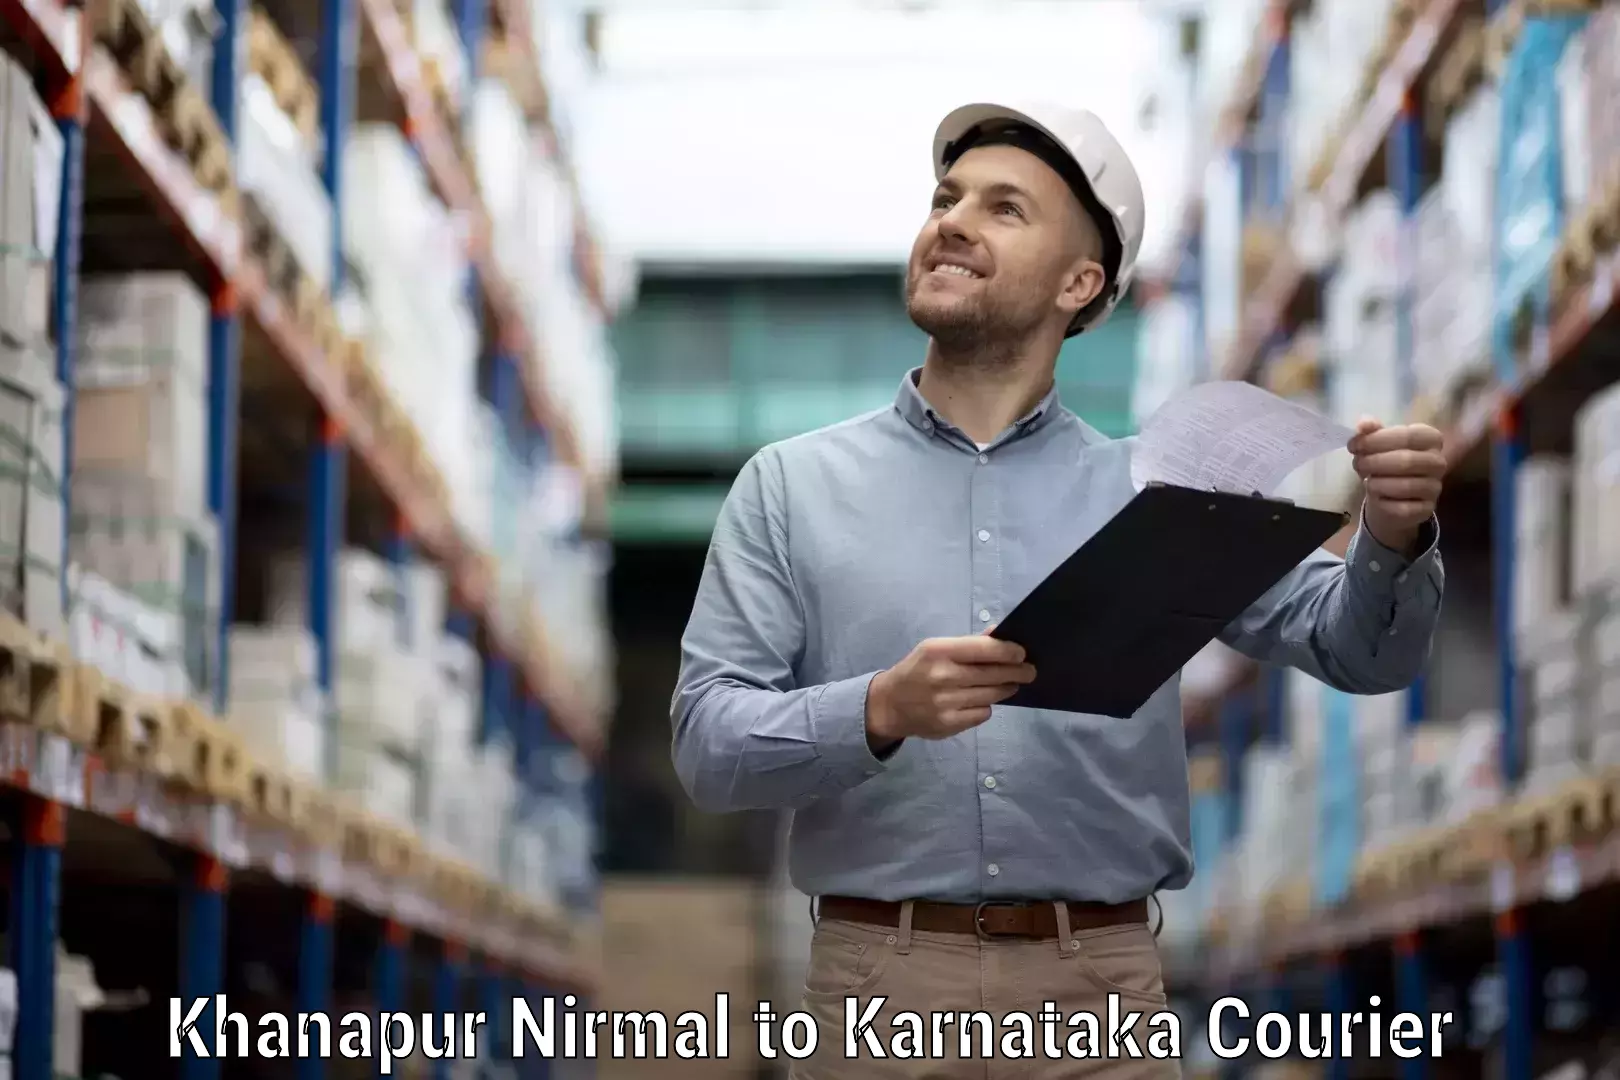 Courier service innovation Khanapur Nirmal to Ittigi